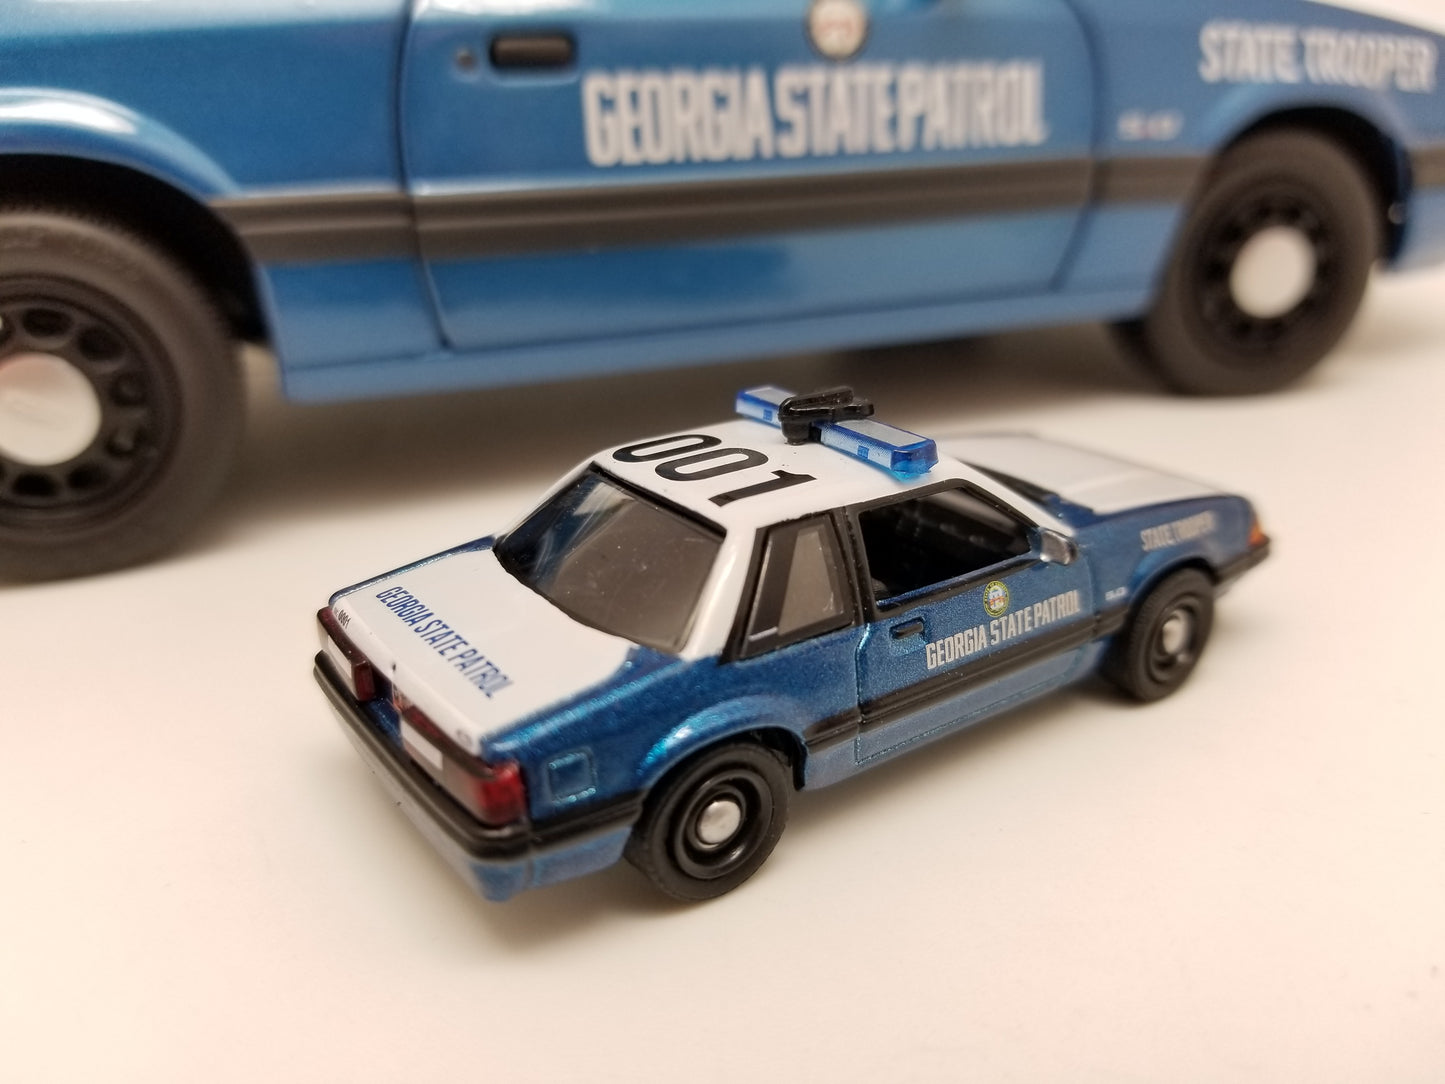 ACME - 1989 SSP Ford Mustang - Georgia State Patrol